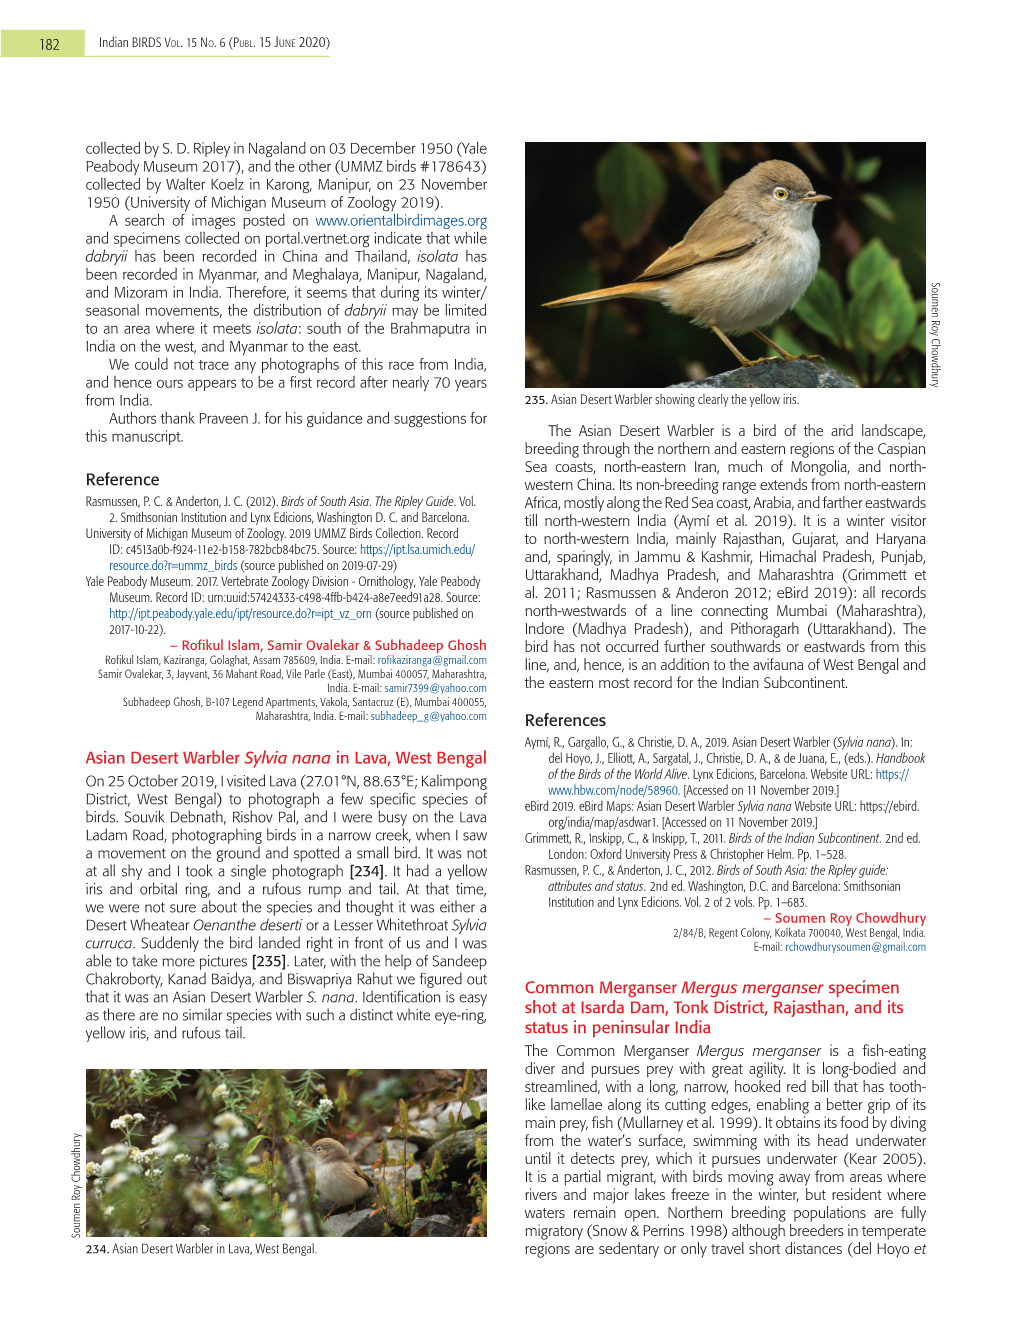 Asian Desert Warbler Sylvia Nana in Lava, West Bengal Del Hoyo, J., Elliott, A., Sargatal, J., Christie, D